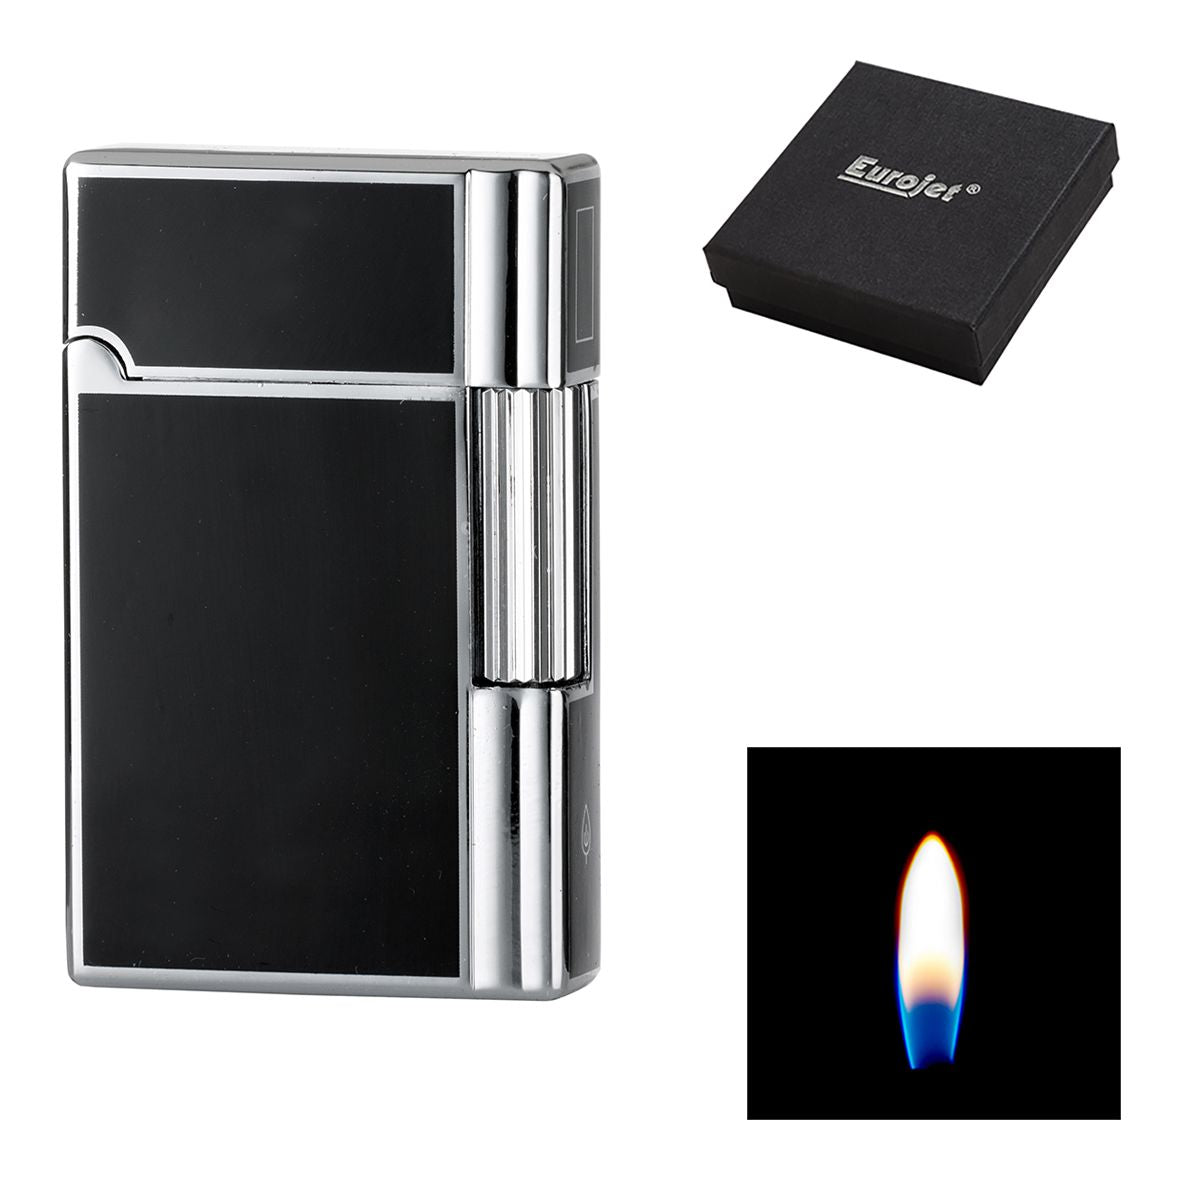 Eurojet Gender Classic Lighter - Gaslighter with Stone - Black Silver